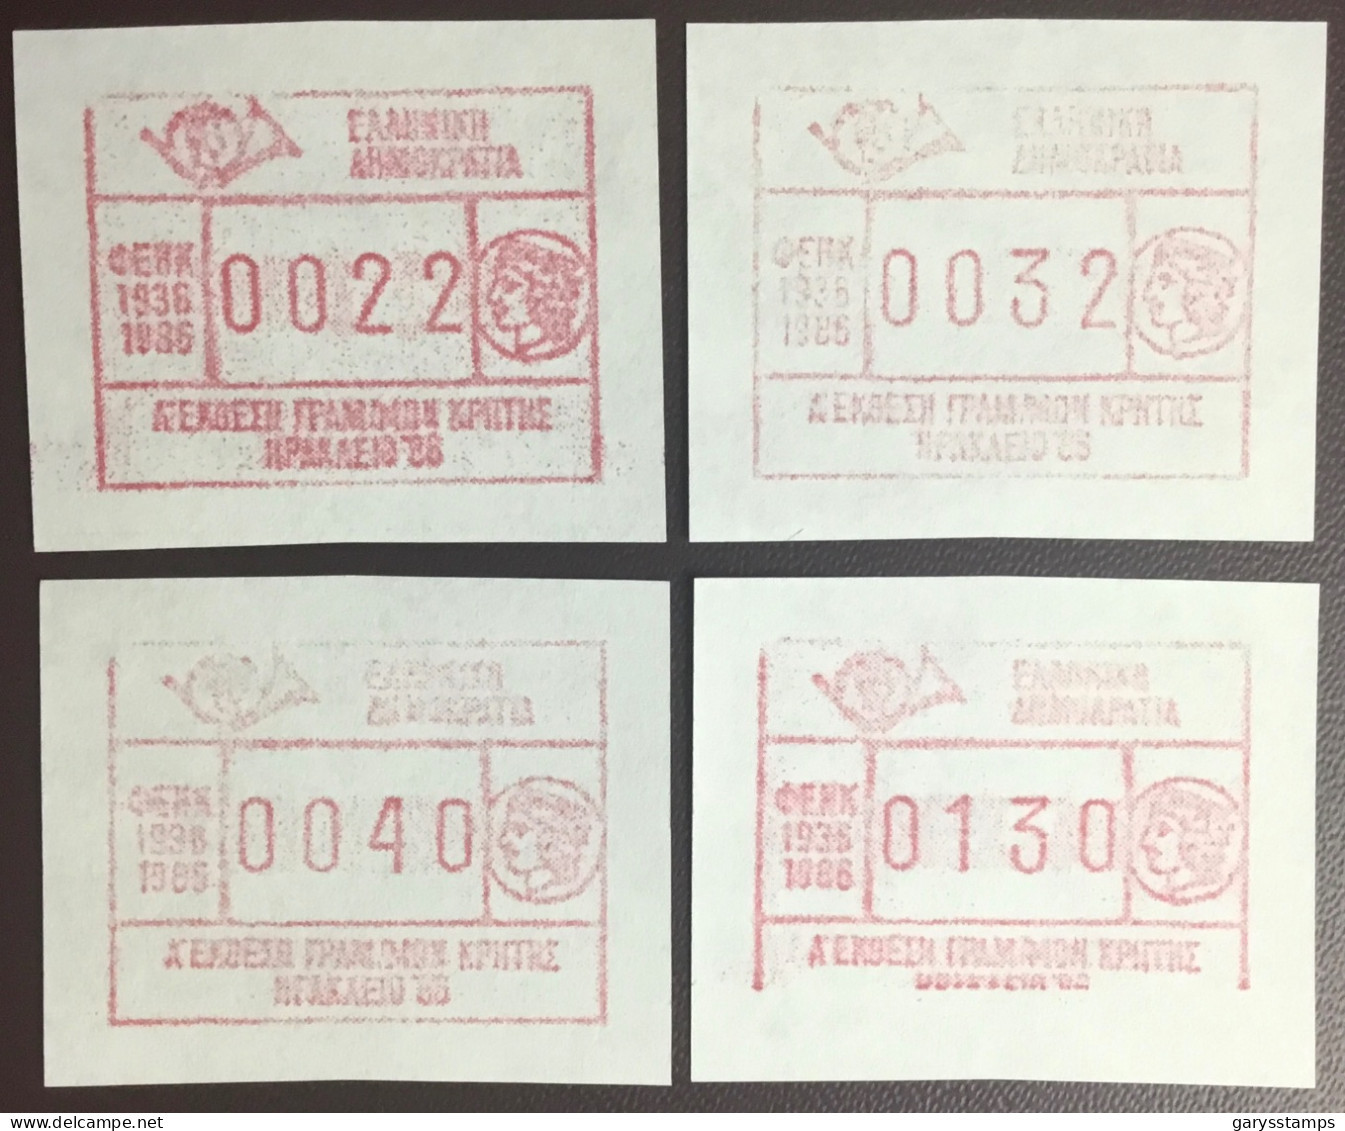 Greece 1986 Frama Machine Labels Heraklion Exhibition MNH - Viñetas De Franqueo [ATM]